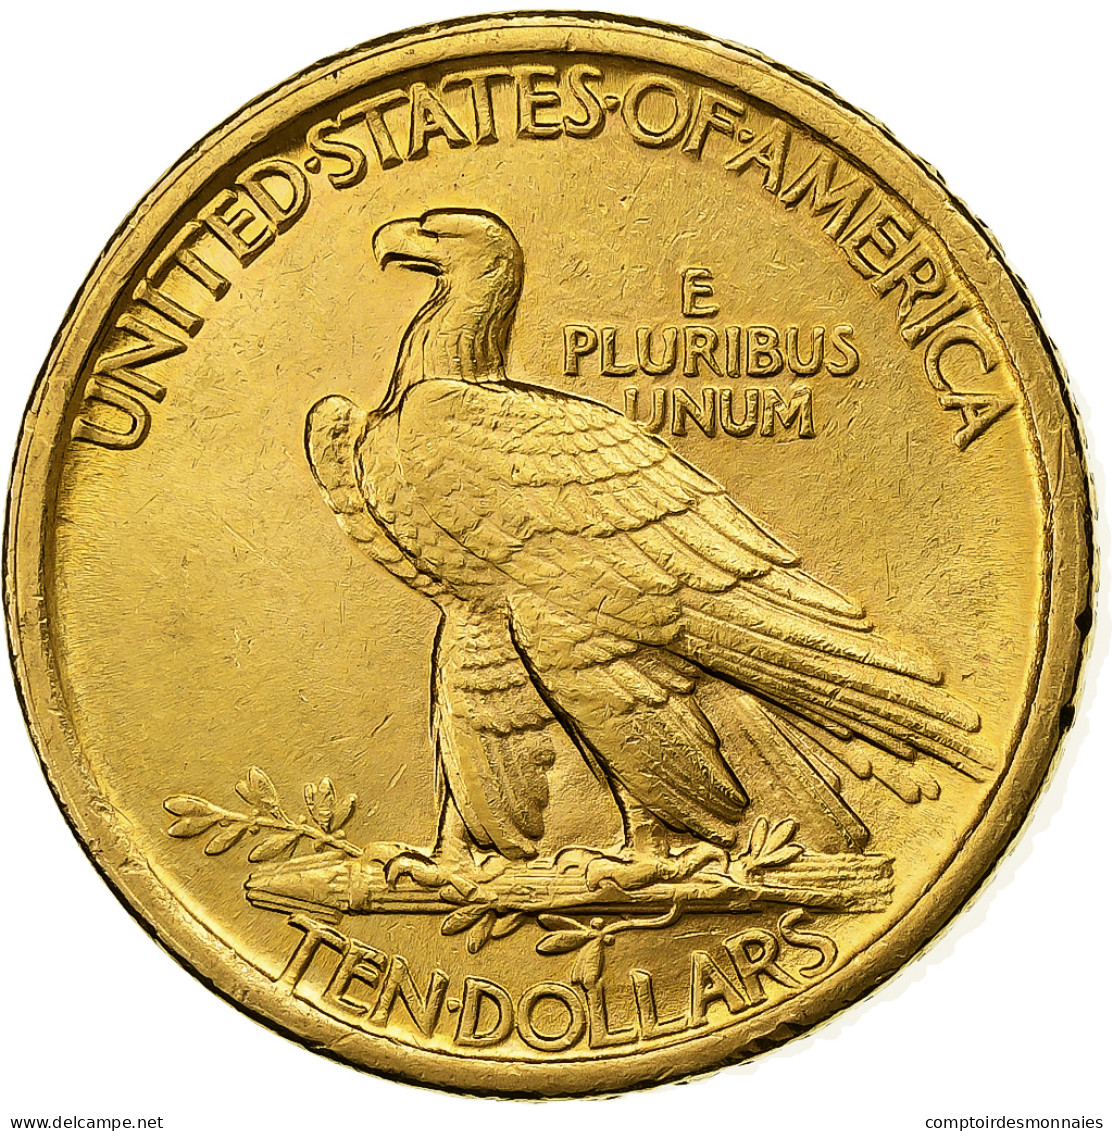 États-Unis, $10, Eagle, Indian Head, 1907, U.S. Mint, Or, SUP, KM:125 - 10$ - Eagles - 1907-1933: Indian Head (Tête Indien)